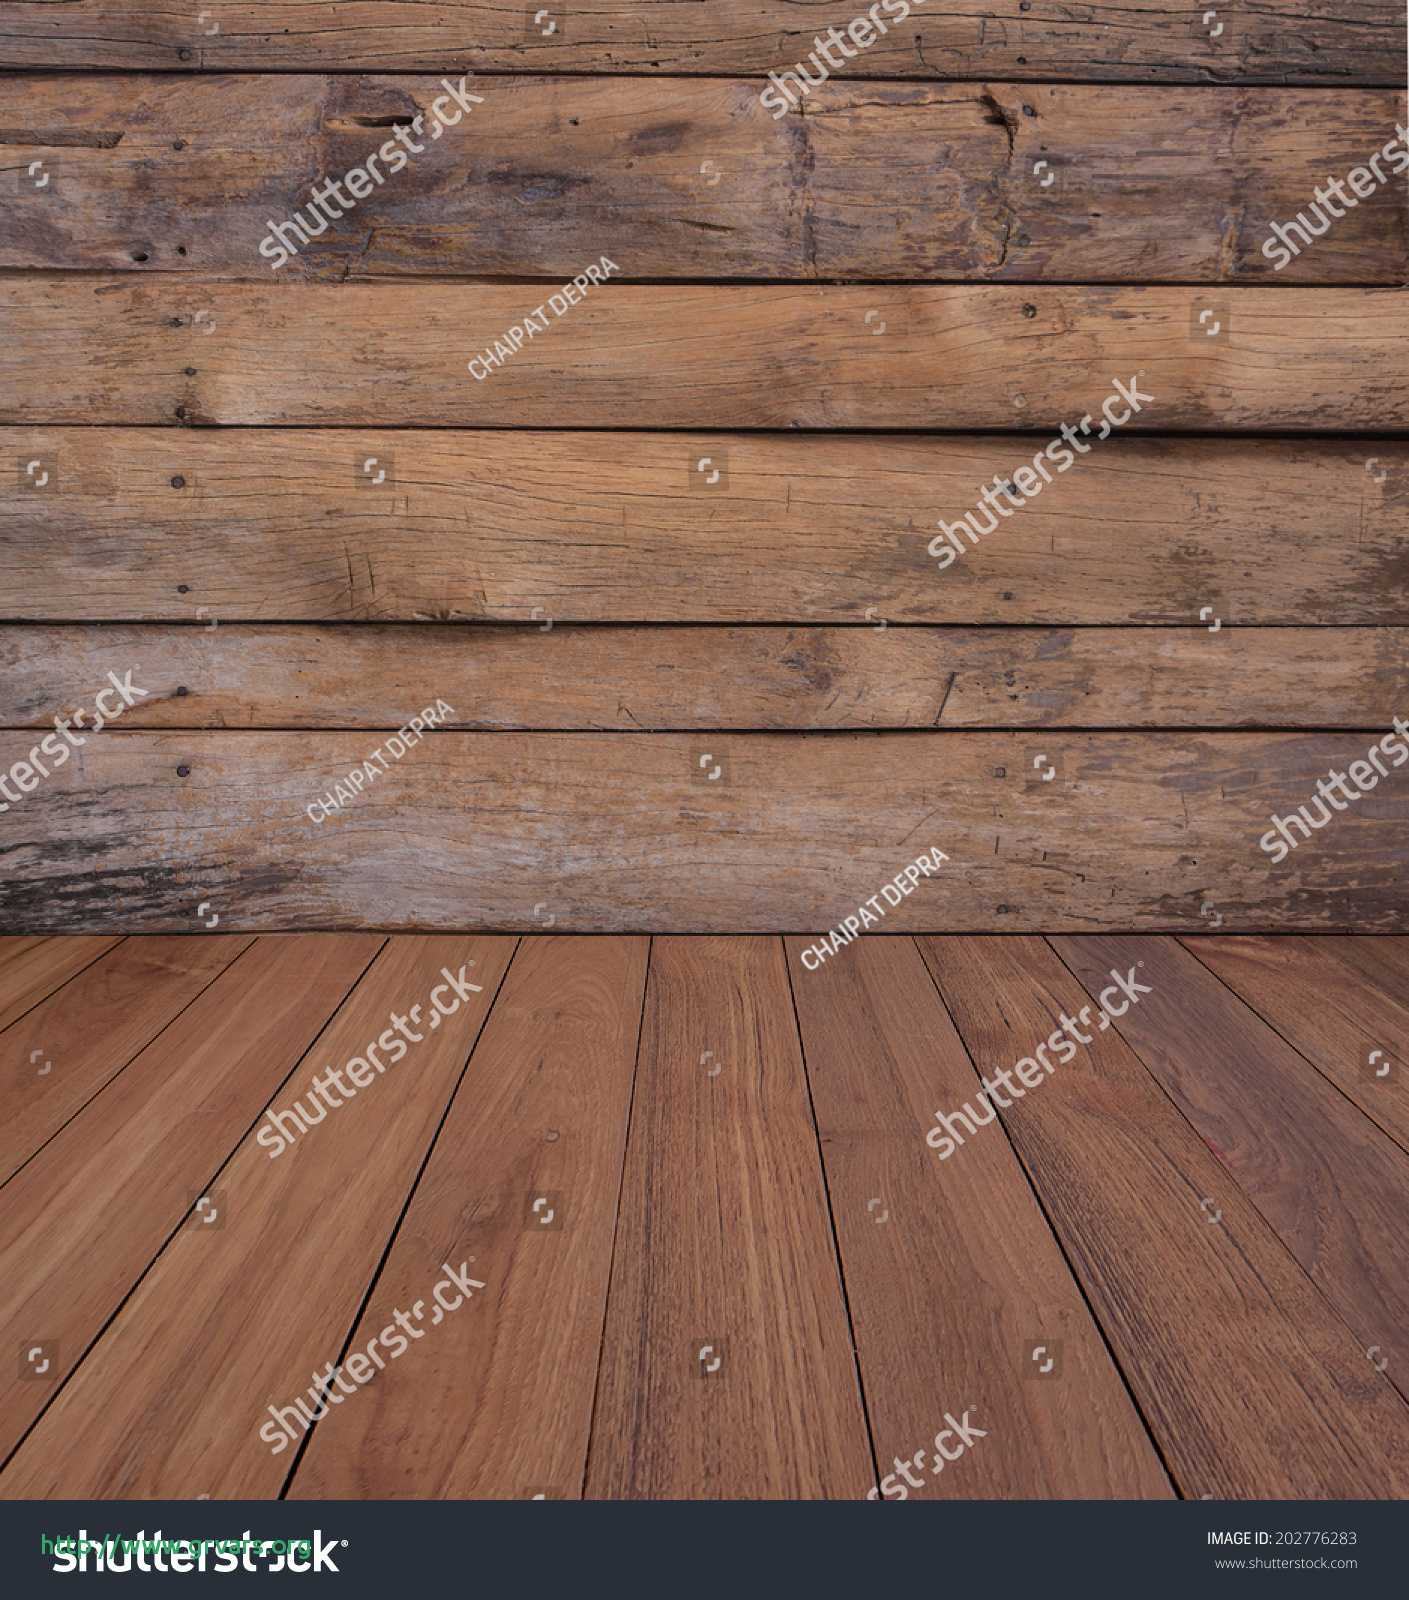 minwax hardwood floor cleaner of 18 beau what type of hardwood floor do i have ideas blog in od wood wall and wood floor